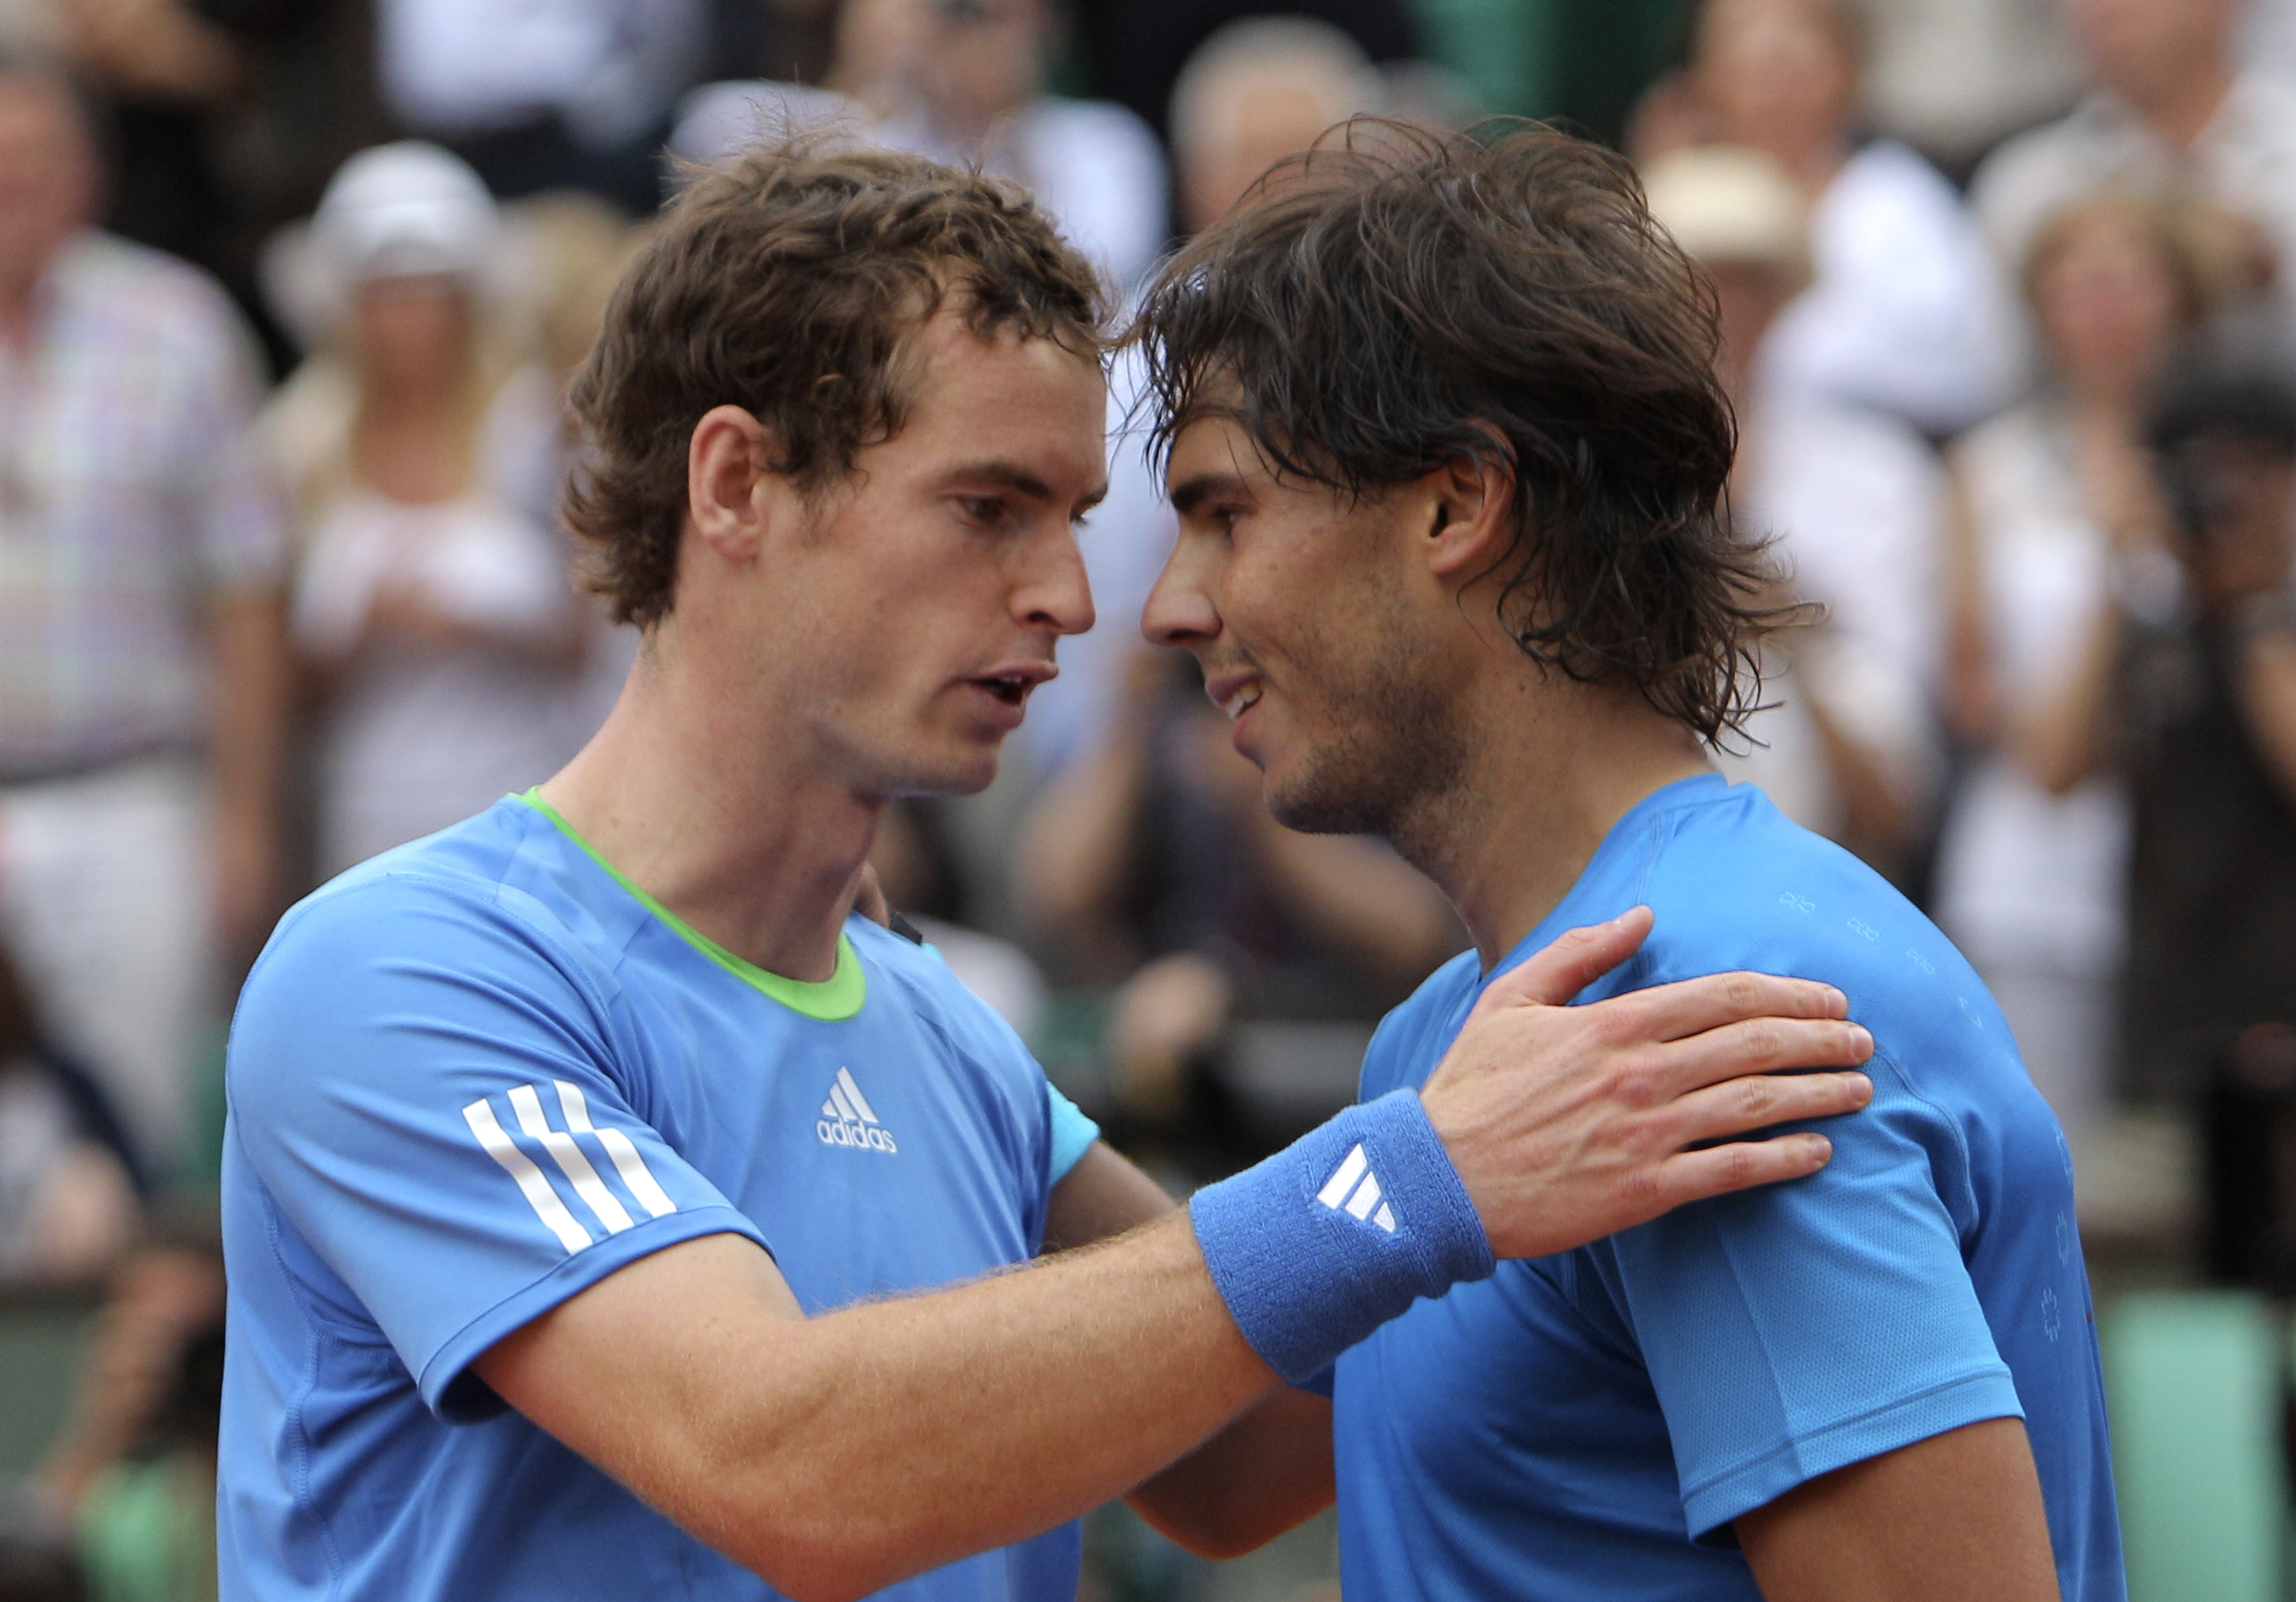 Tennis, Rafael Nadal, Roger Federer, Novak Djokovic, Andy Murray